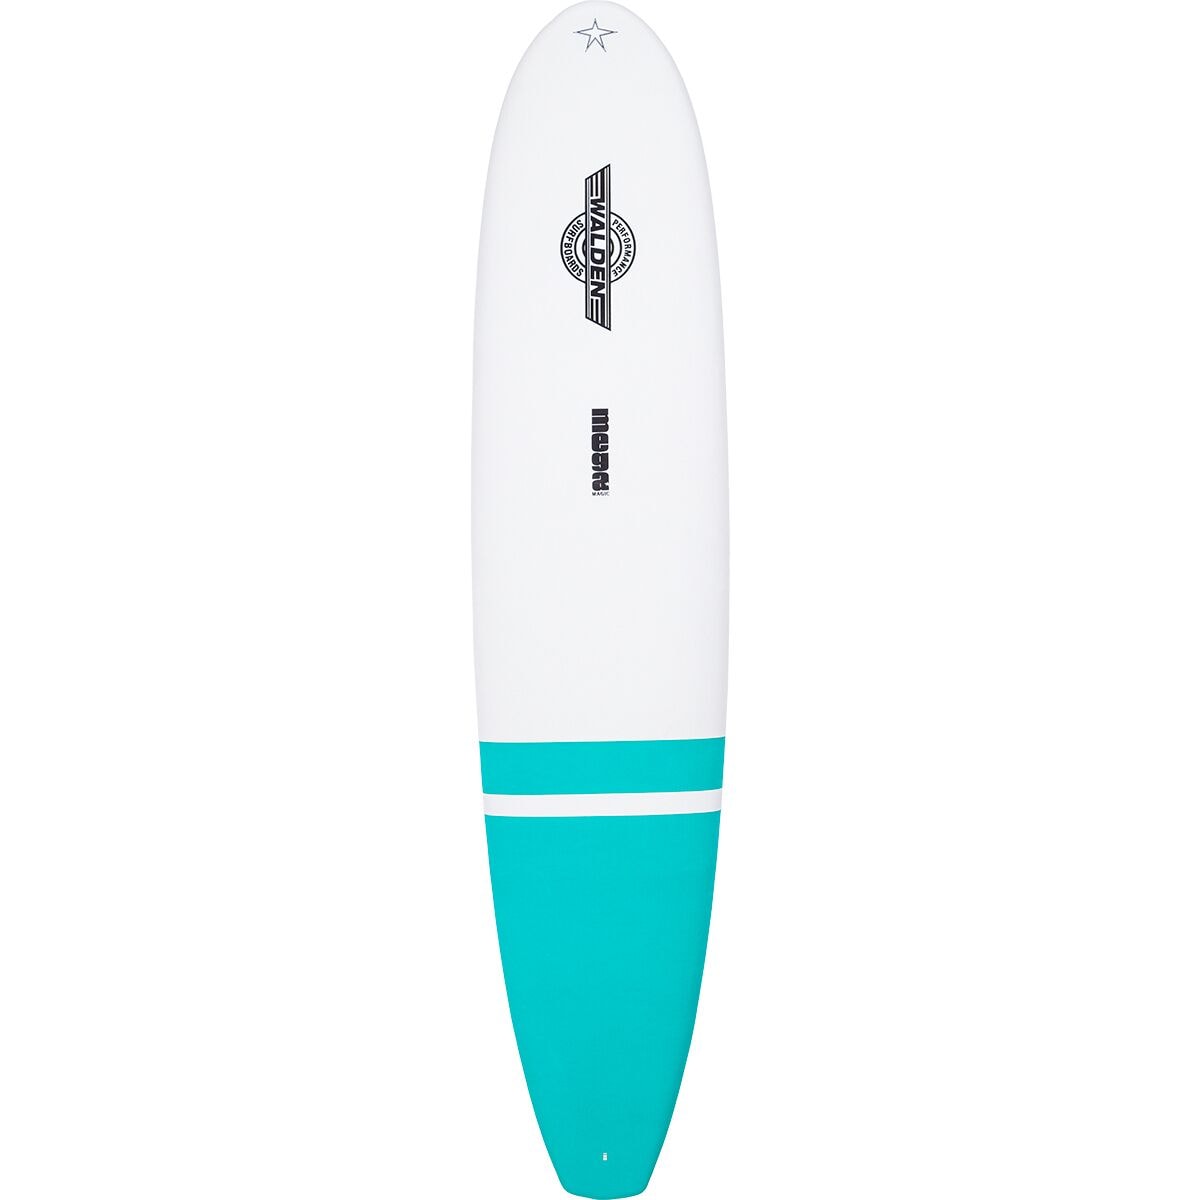 Walden Surfboards Mega Magic Custom-Performance Soft Top Surfboard